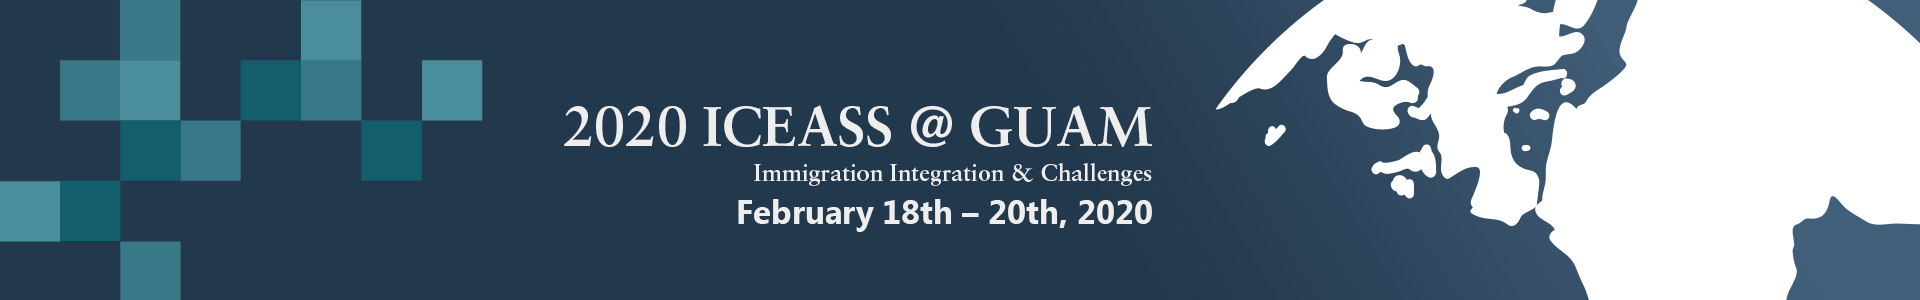 2020 ICEASS @ GUAM: Immigration Integration & Challenges